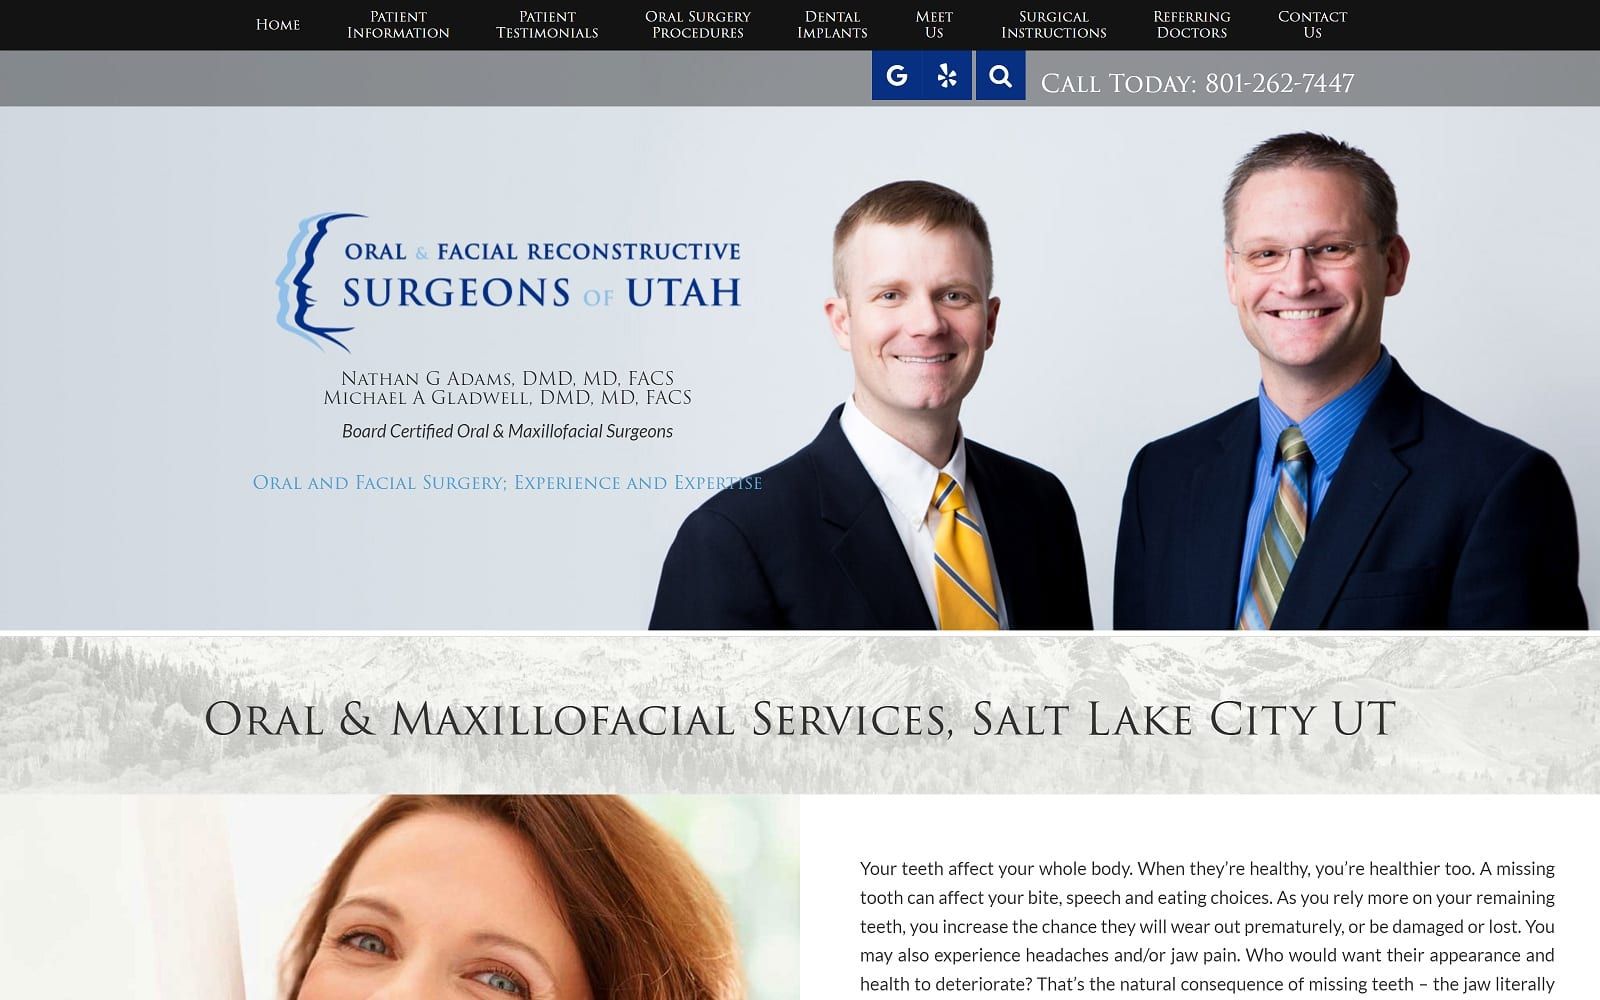 The screenshot of oral & facial reconstructive surgeons of utah ofrsurgeons. Com website